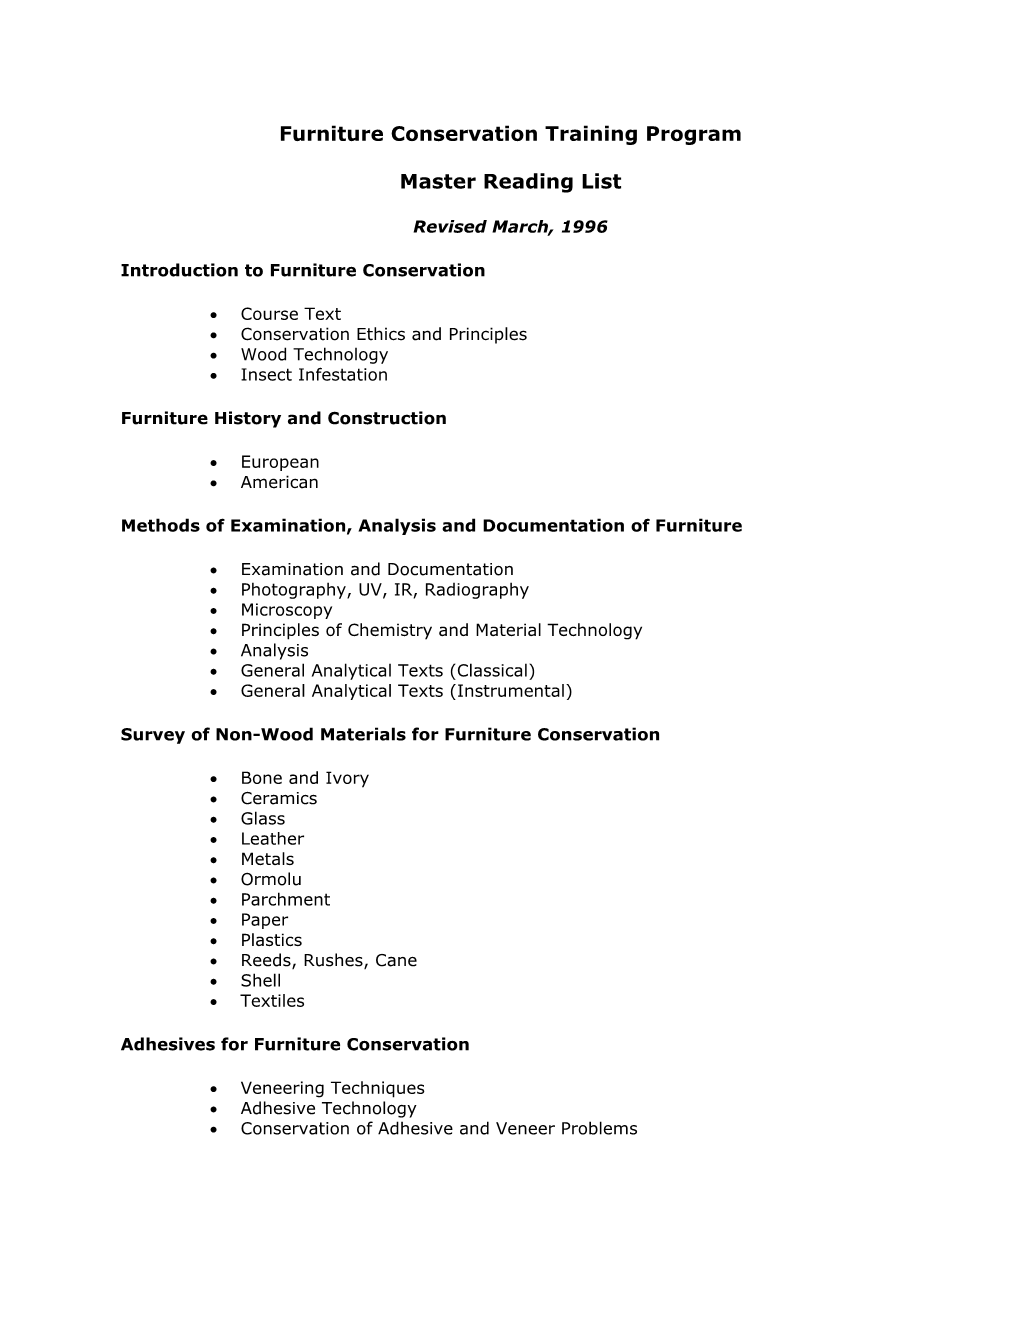 Furniture Conservation Training Program Master Reading List